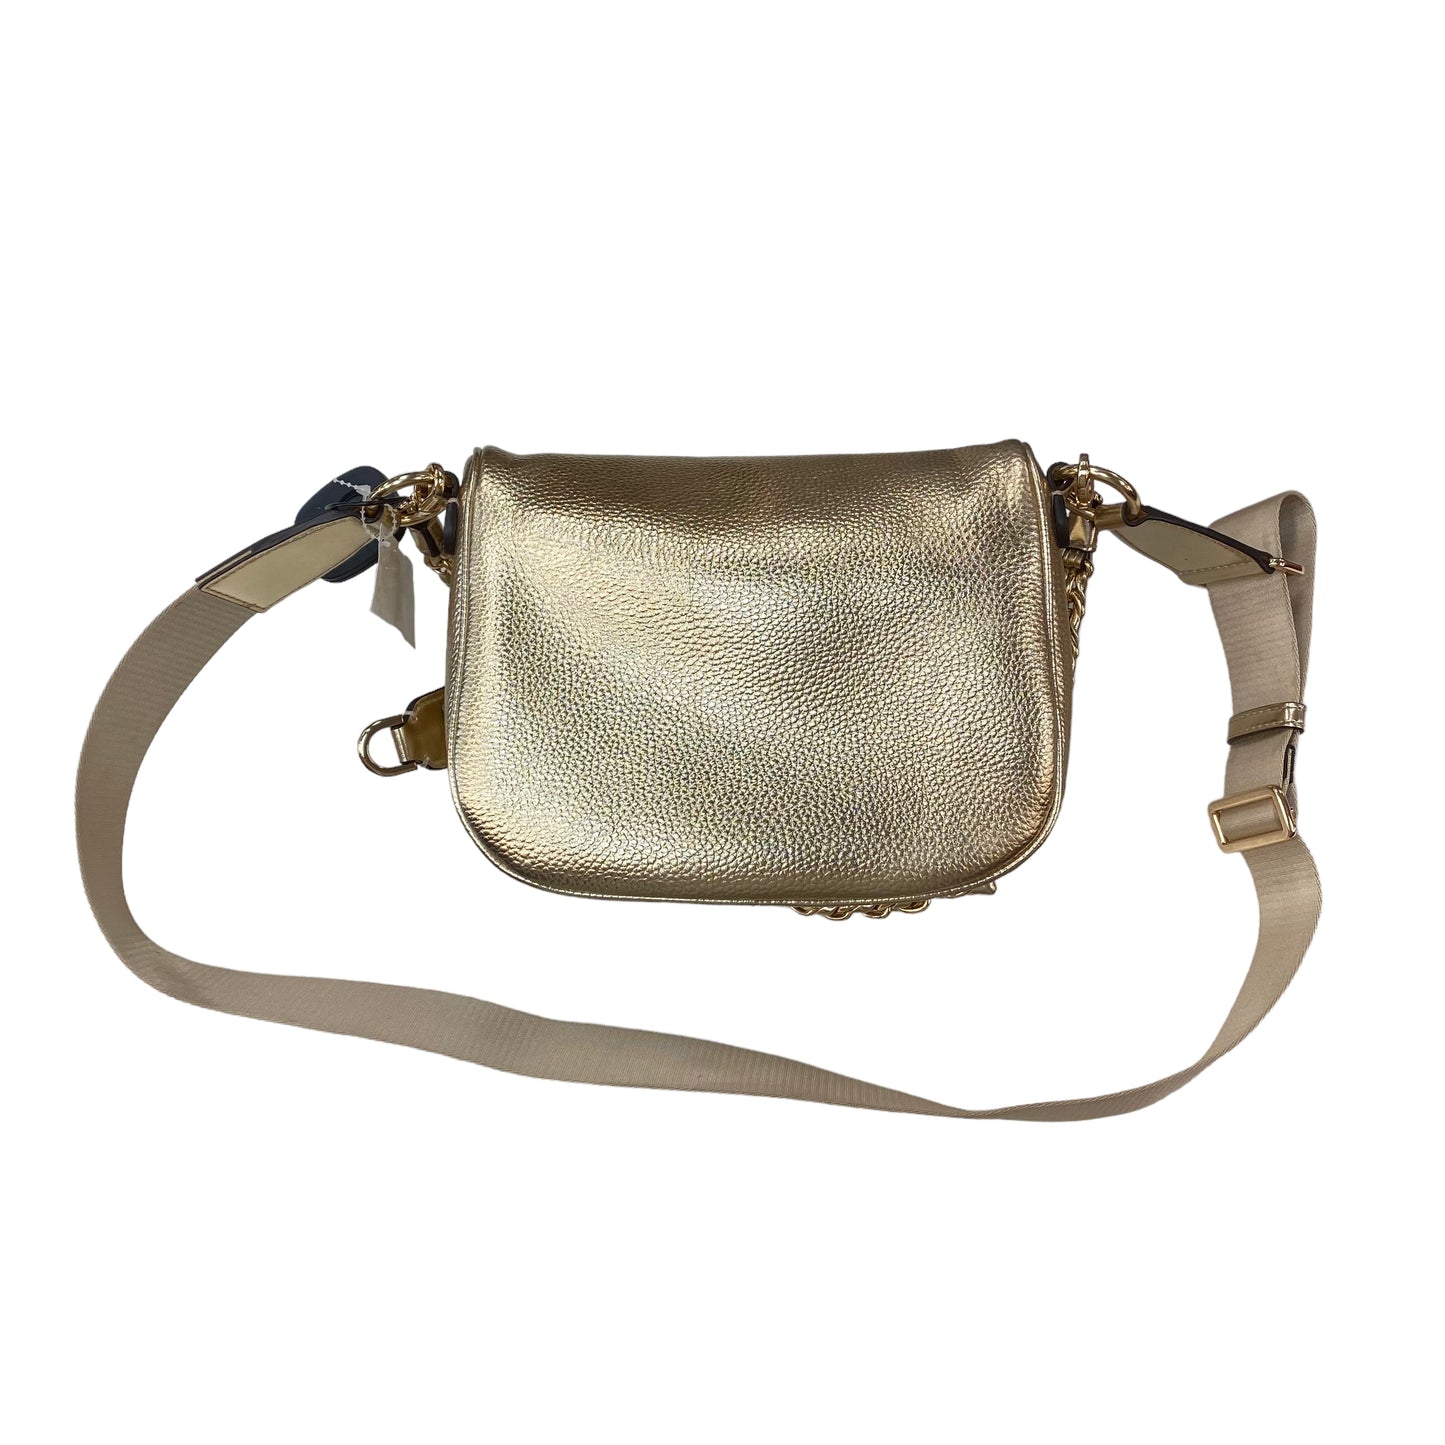 Gold Handbag Designer Michael Kors, Size Medium